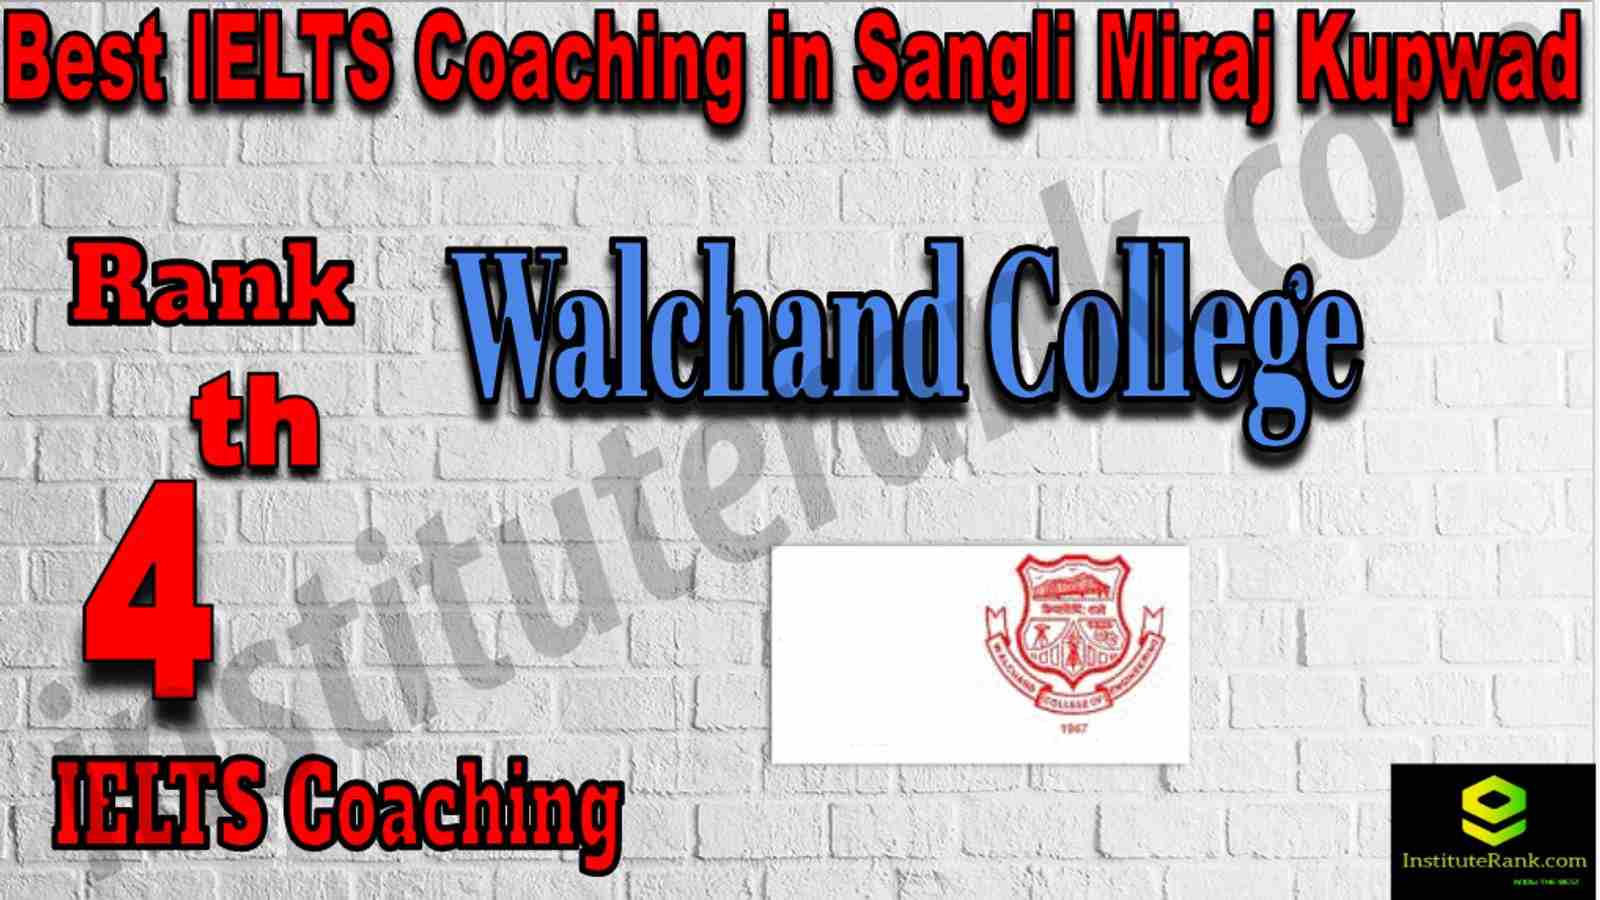 4th Best IELTS Coaching in Sangli Miraj Kupwad